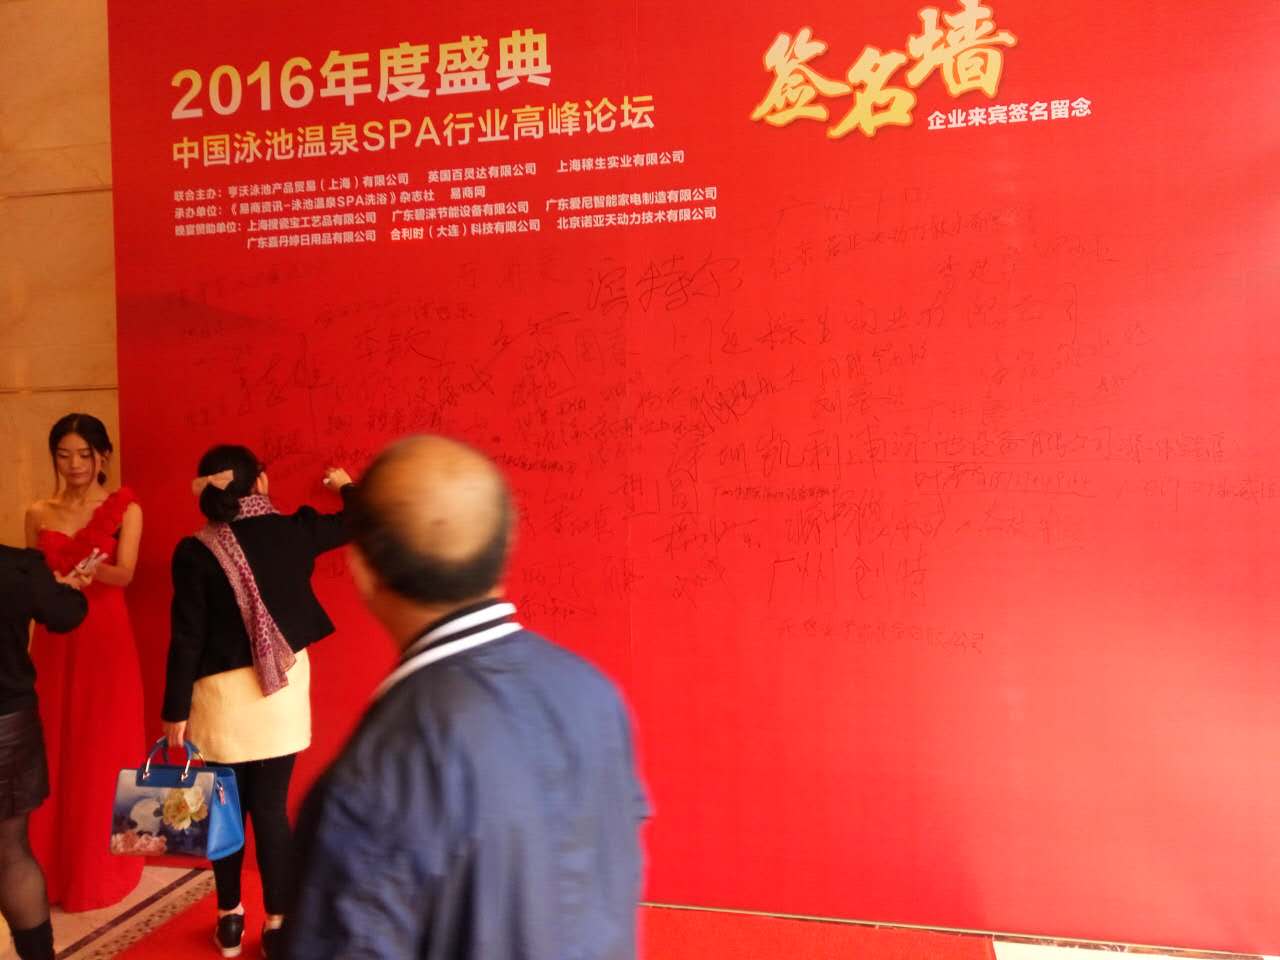 Mingdi Heat Pump warmly congratulates the 2016 China Pool Hot Spring Spa Industry Development Summit Forum successfully held